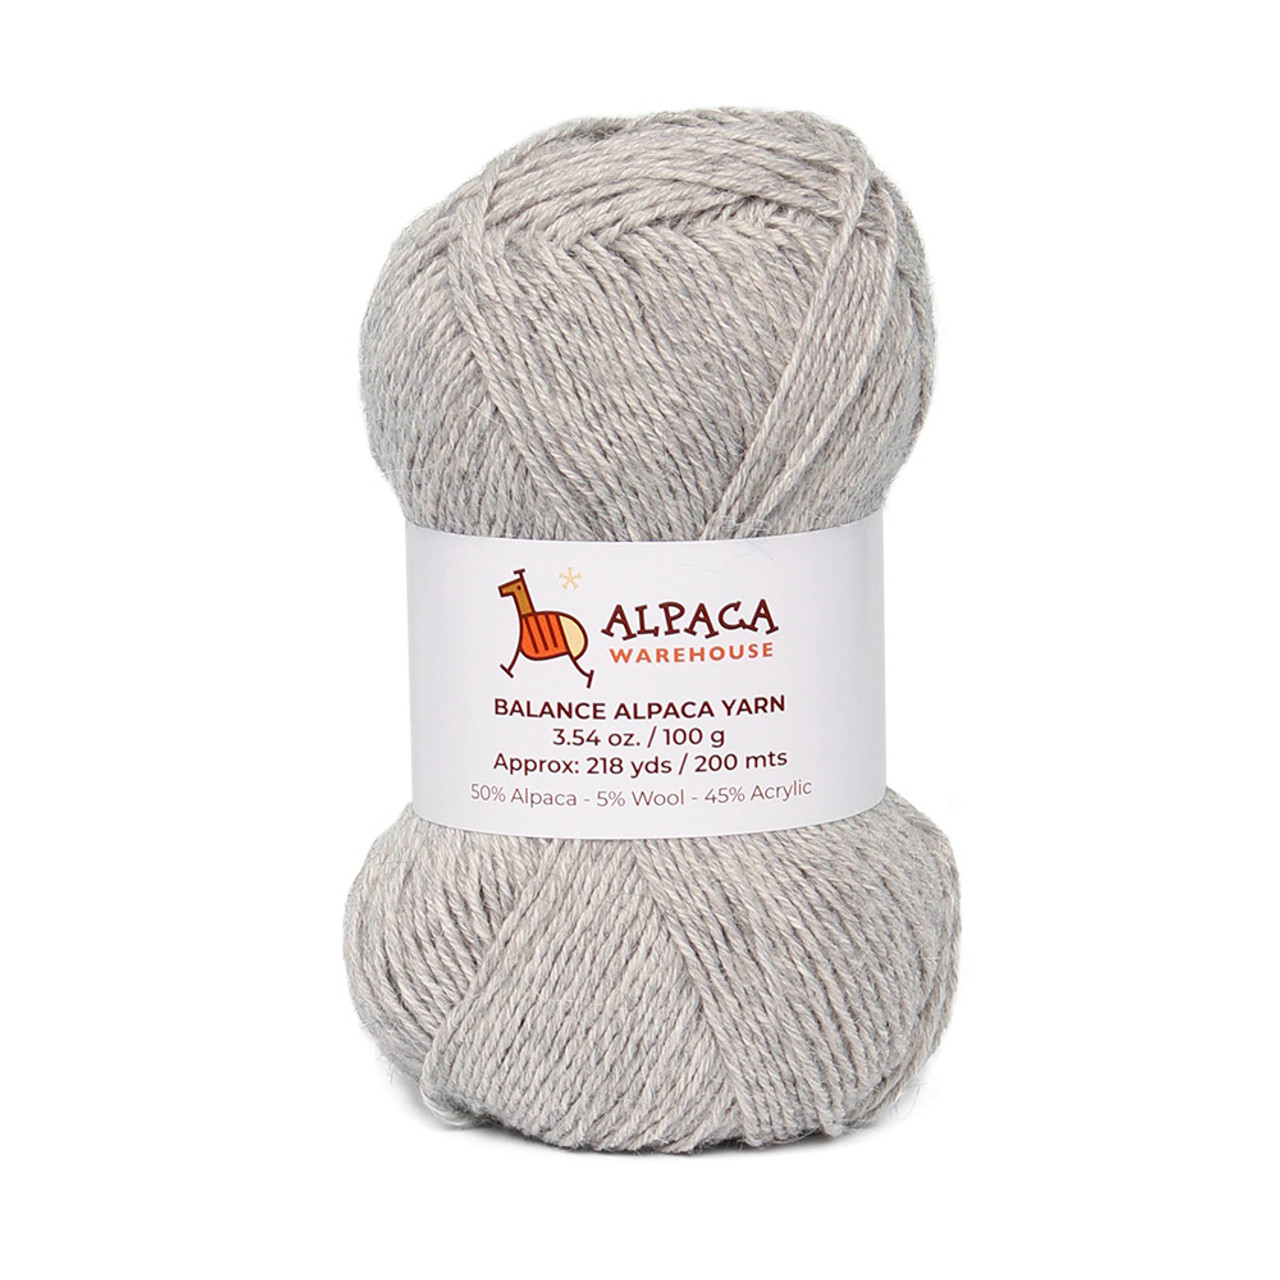 Buy Alpaca yarn for knitting and crochet